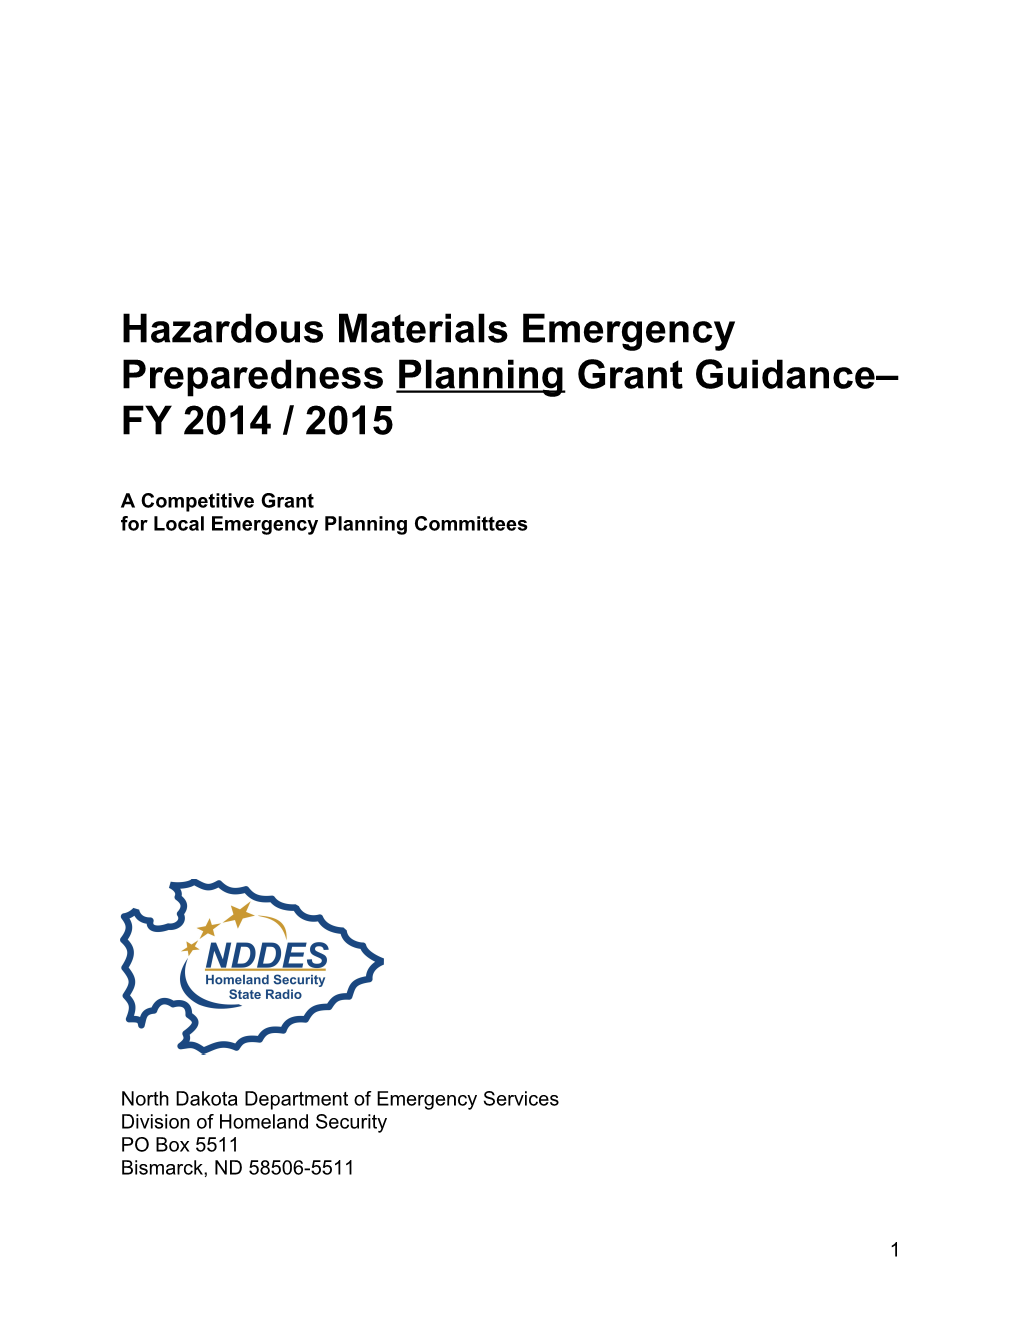 Hazardous Materials Emergency Preparedness Grant Program s2